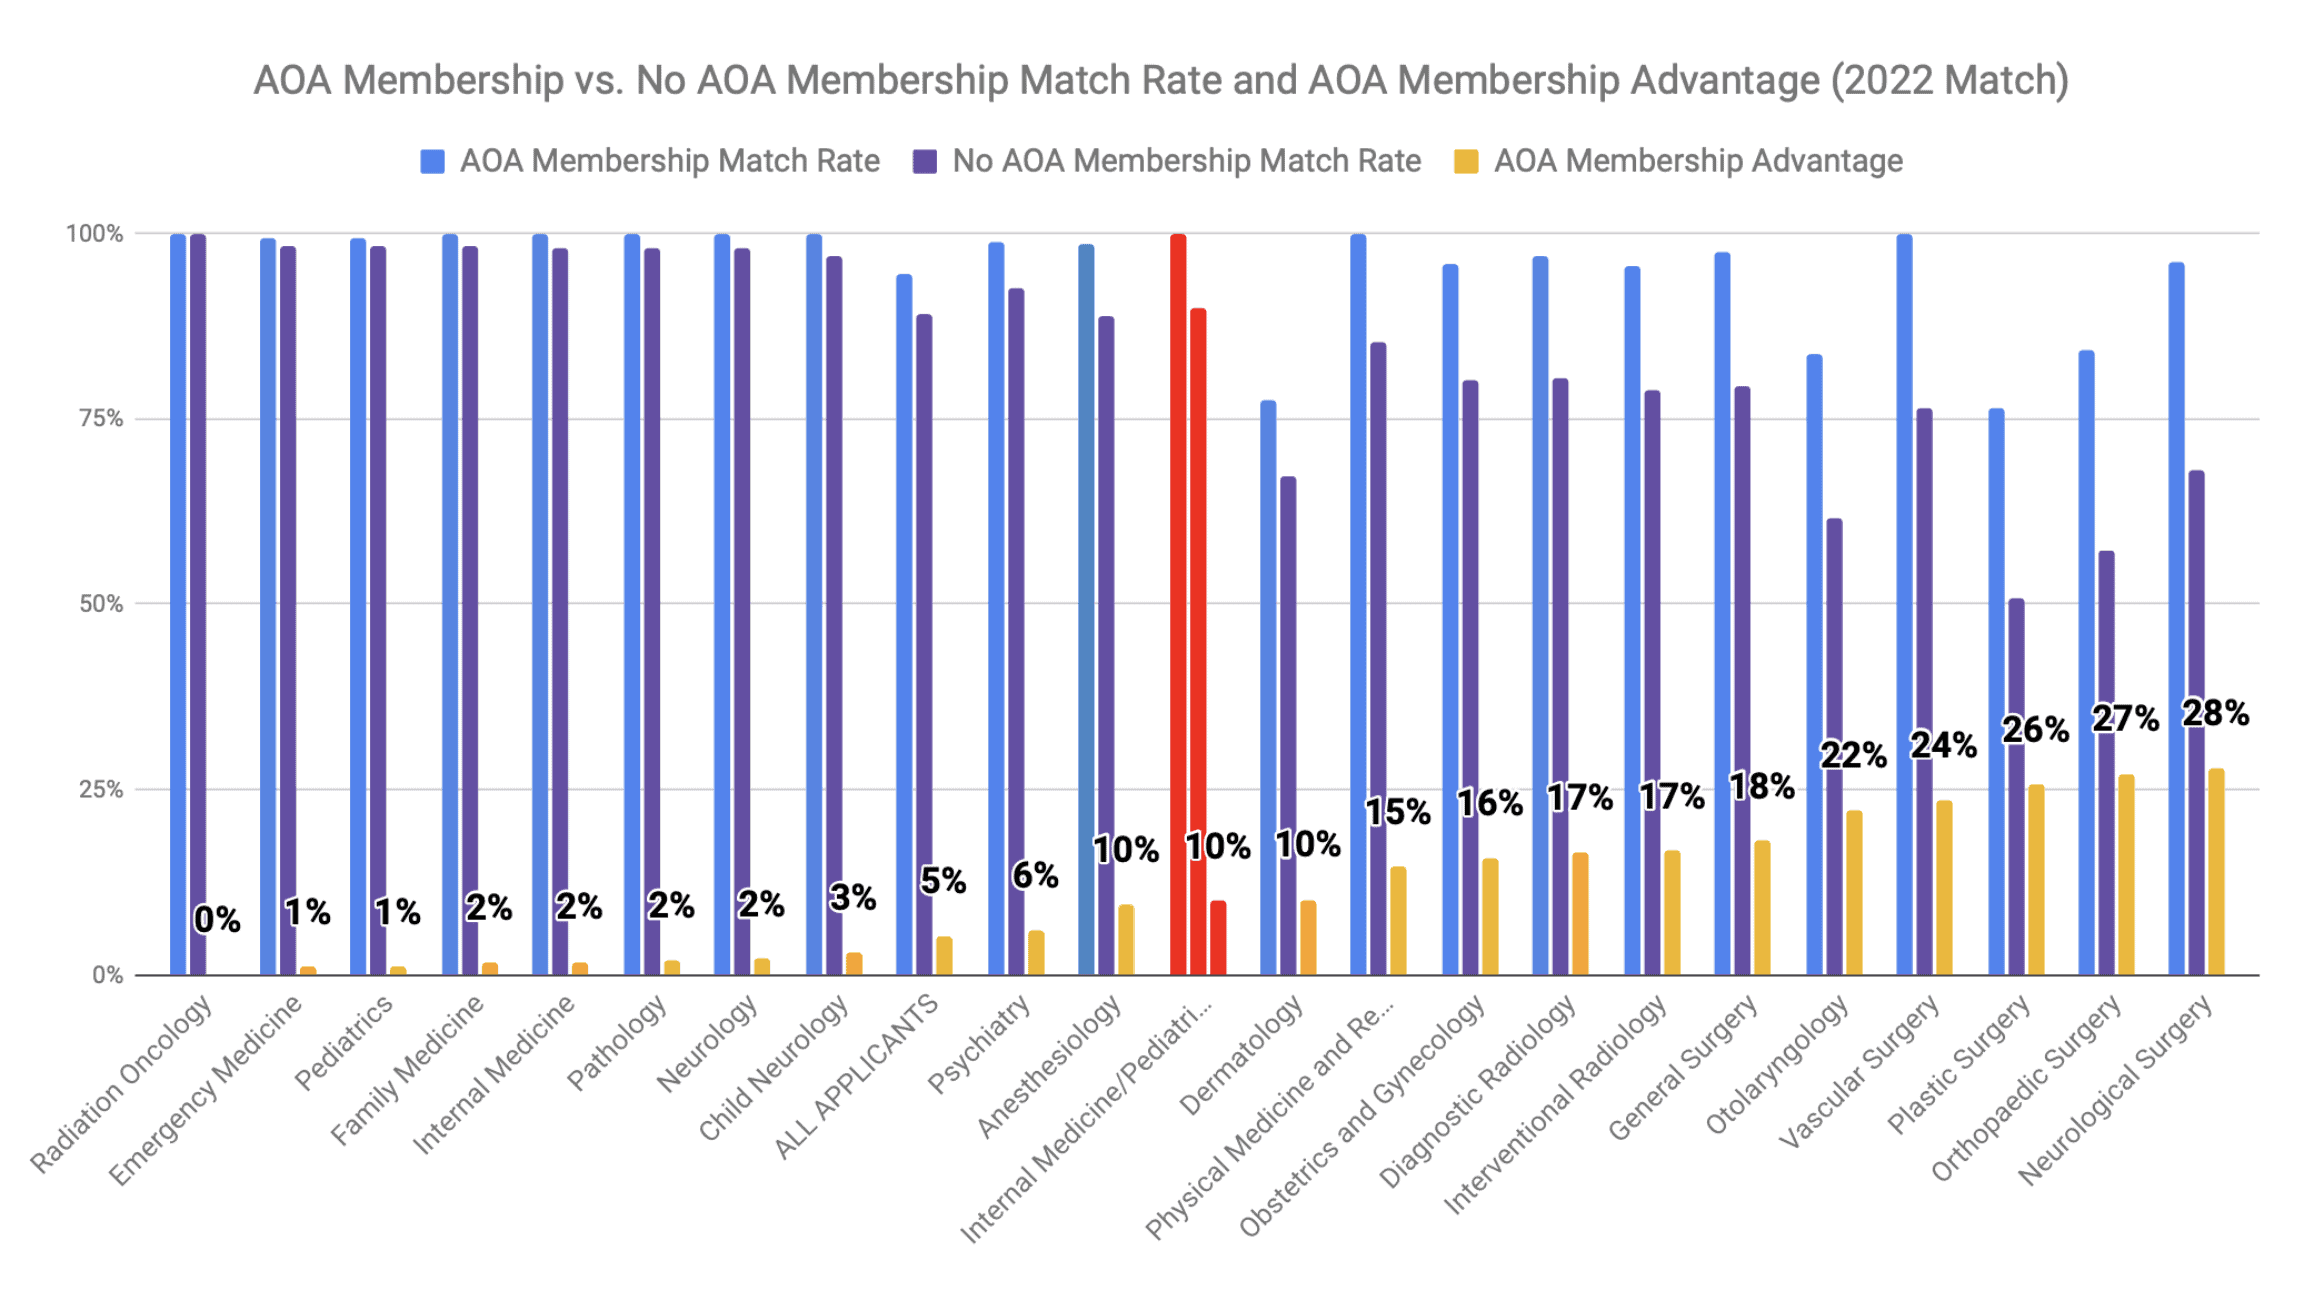 AOA Membership Advantage for Internal Medicine/Pediatrics 2022